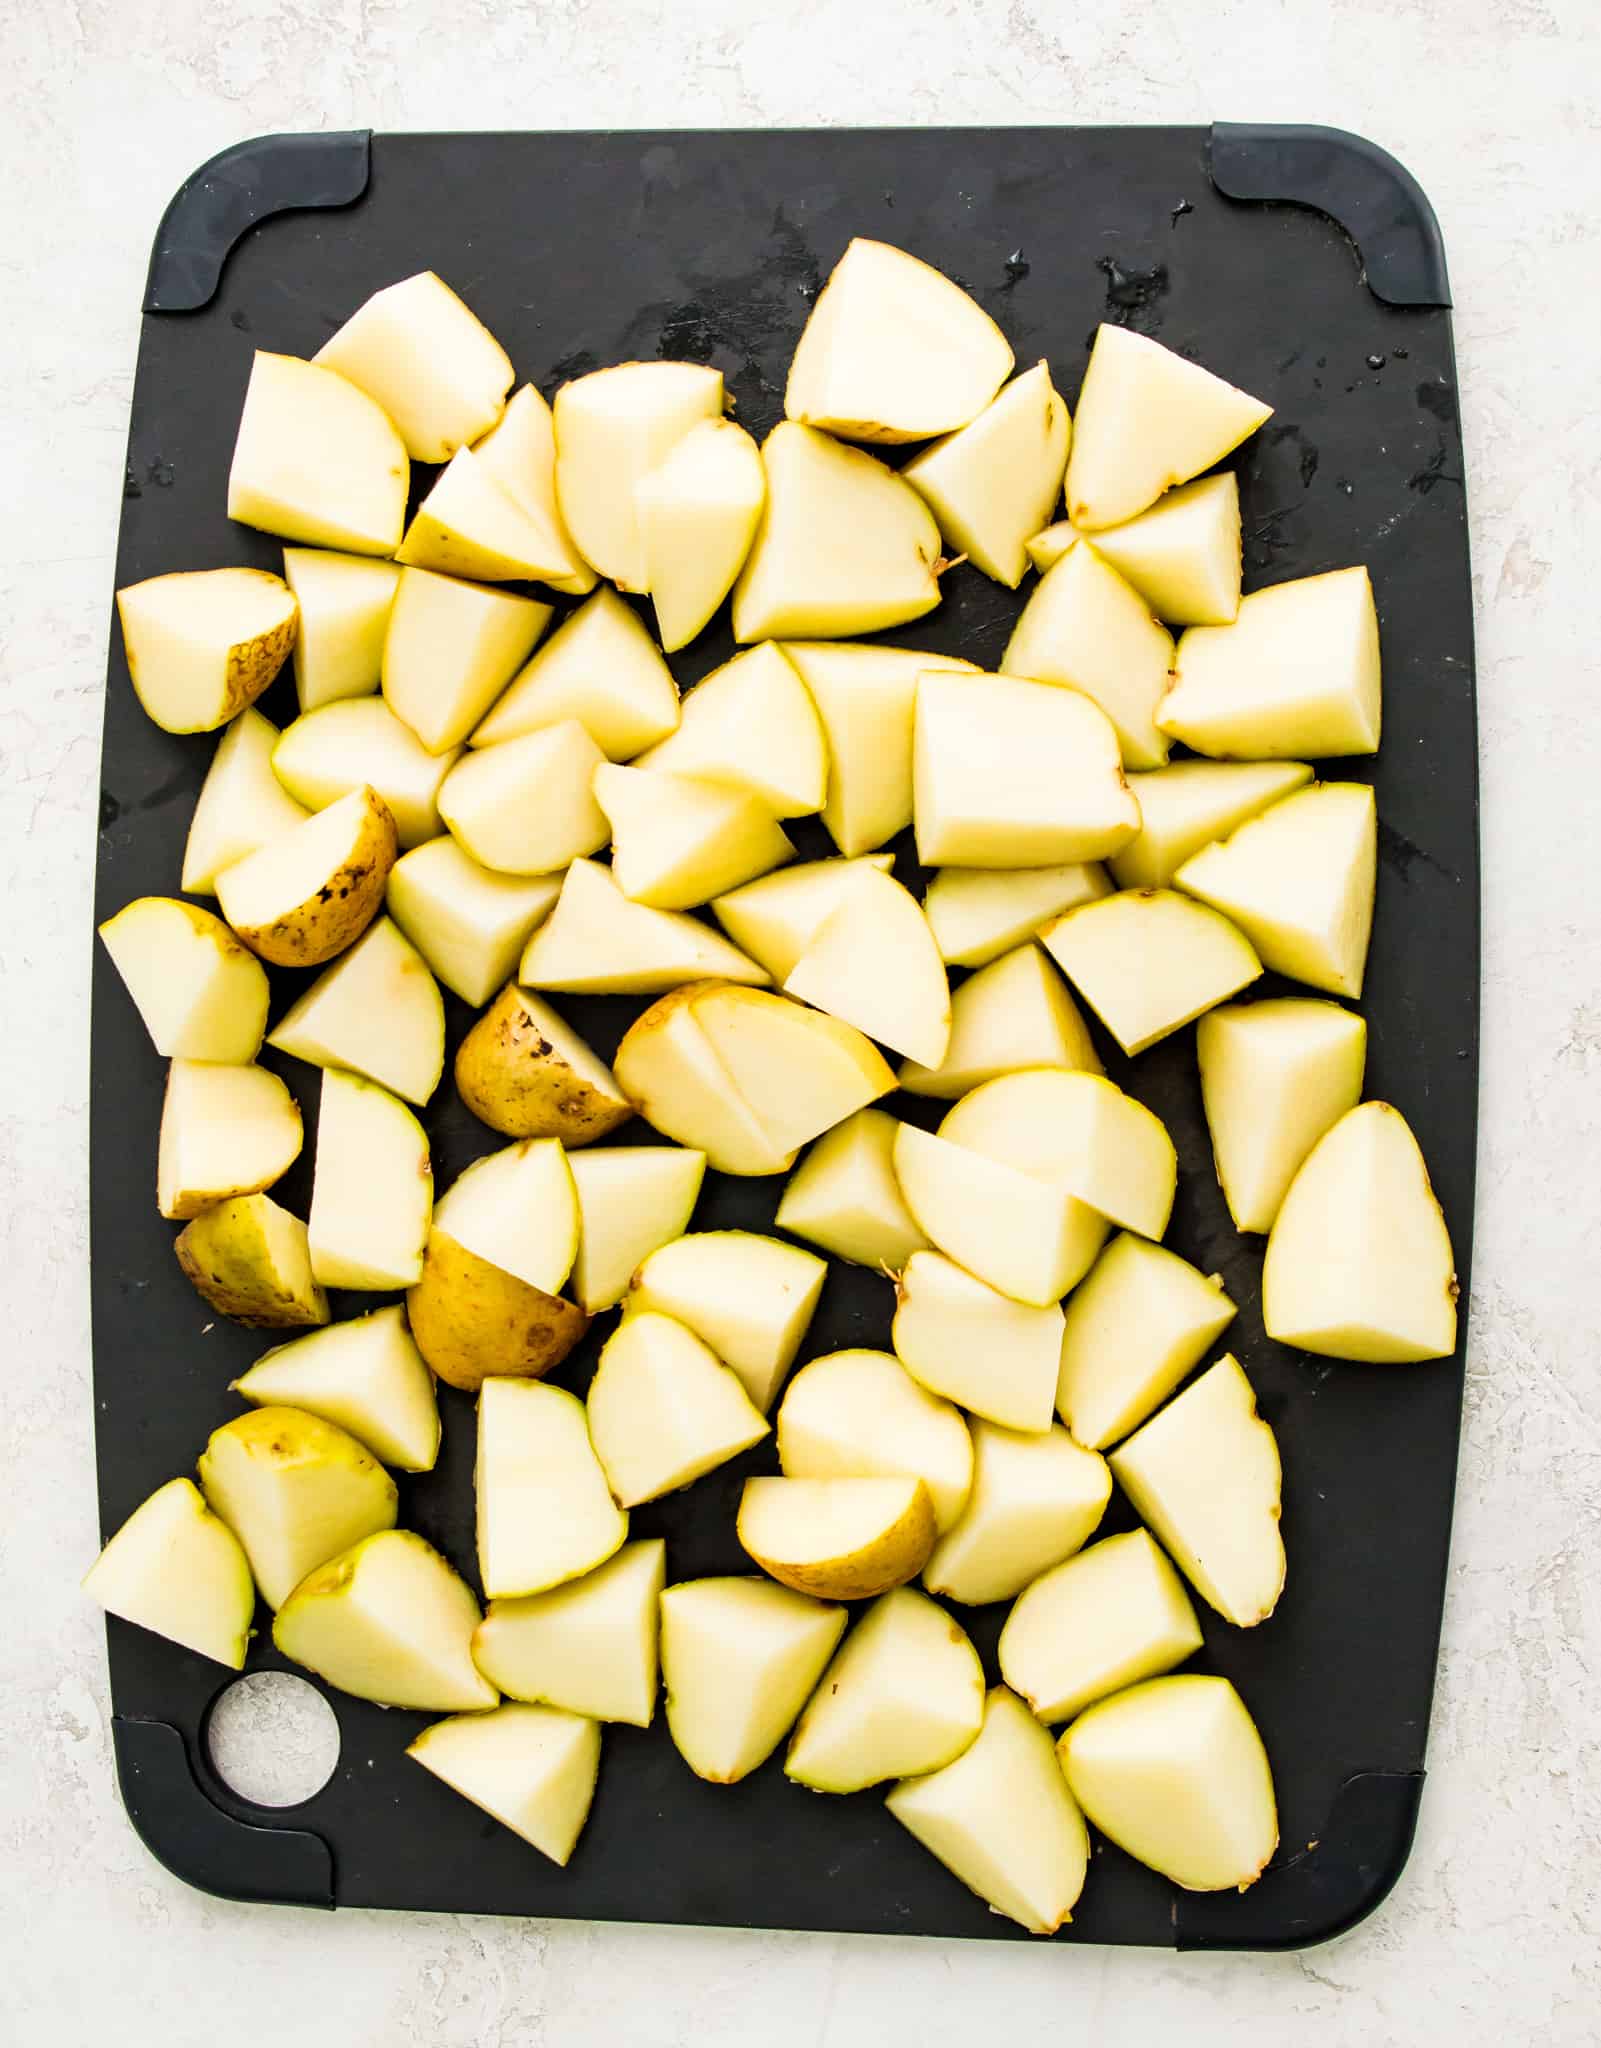 Chopped, raw potatoes on a cutting board.